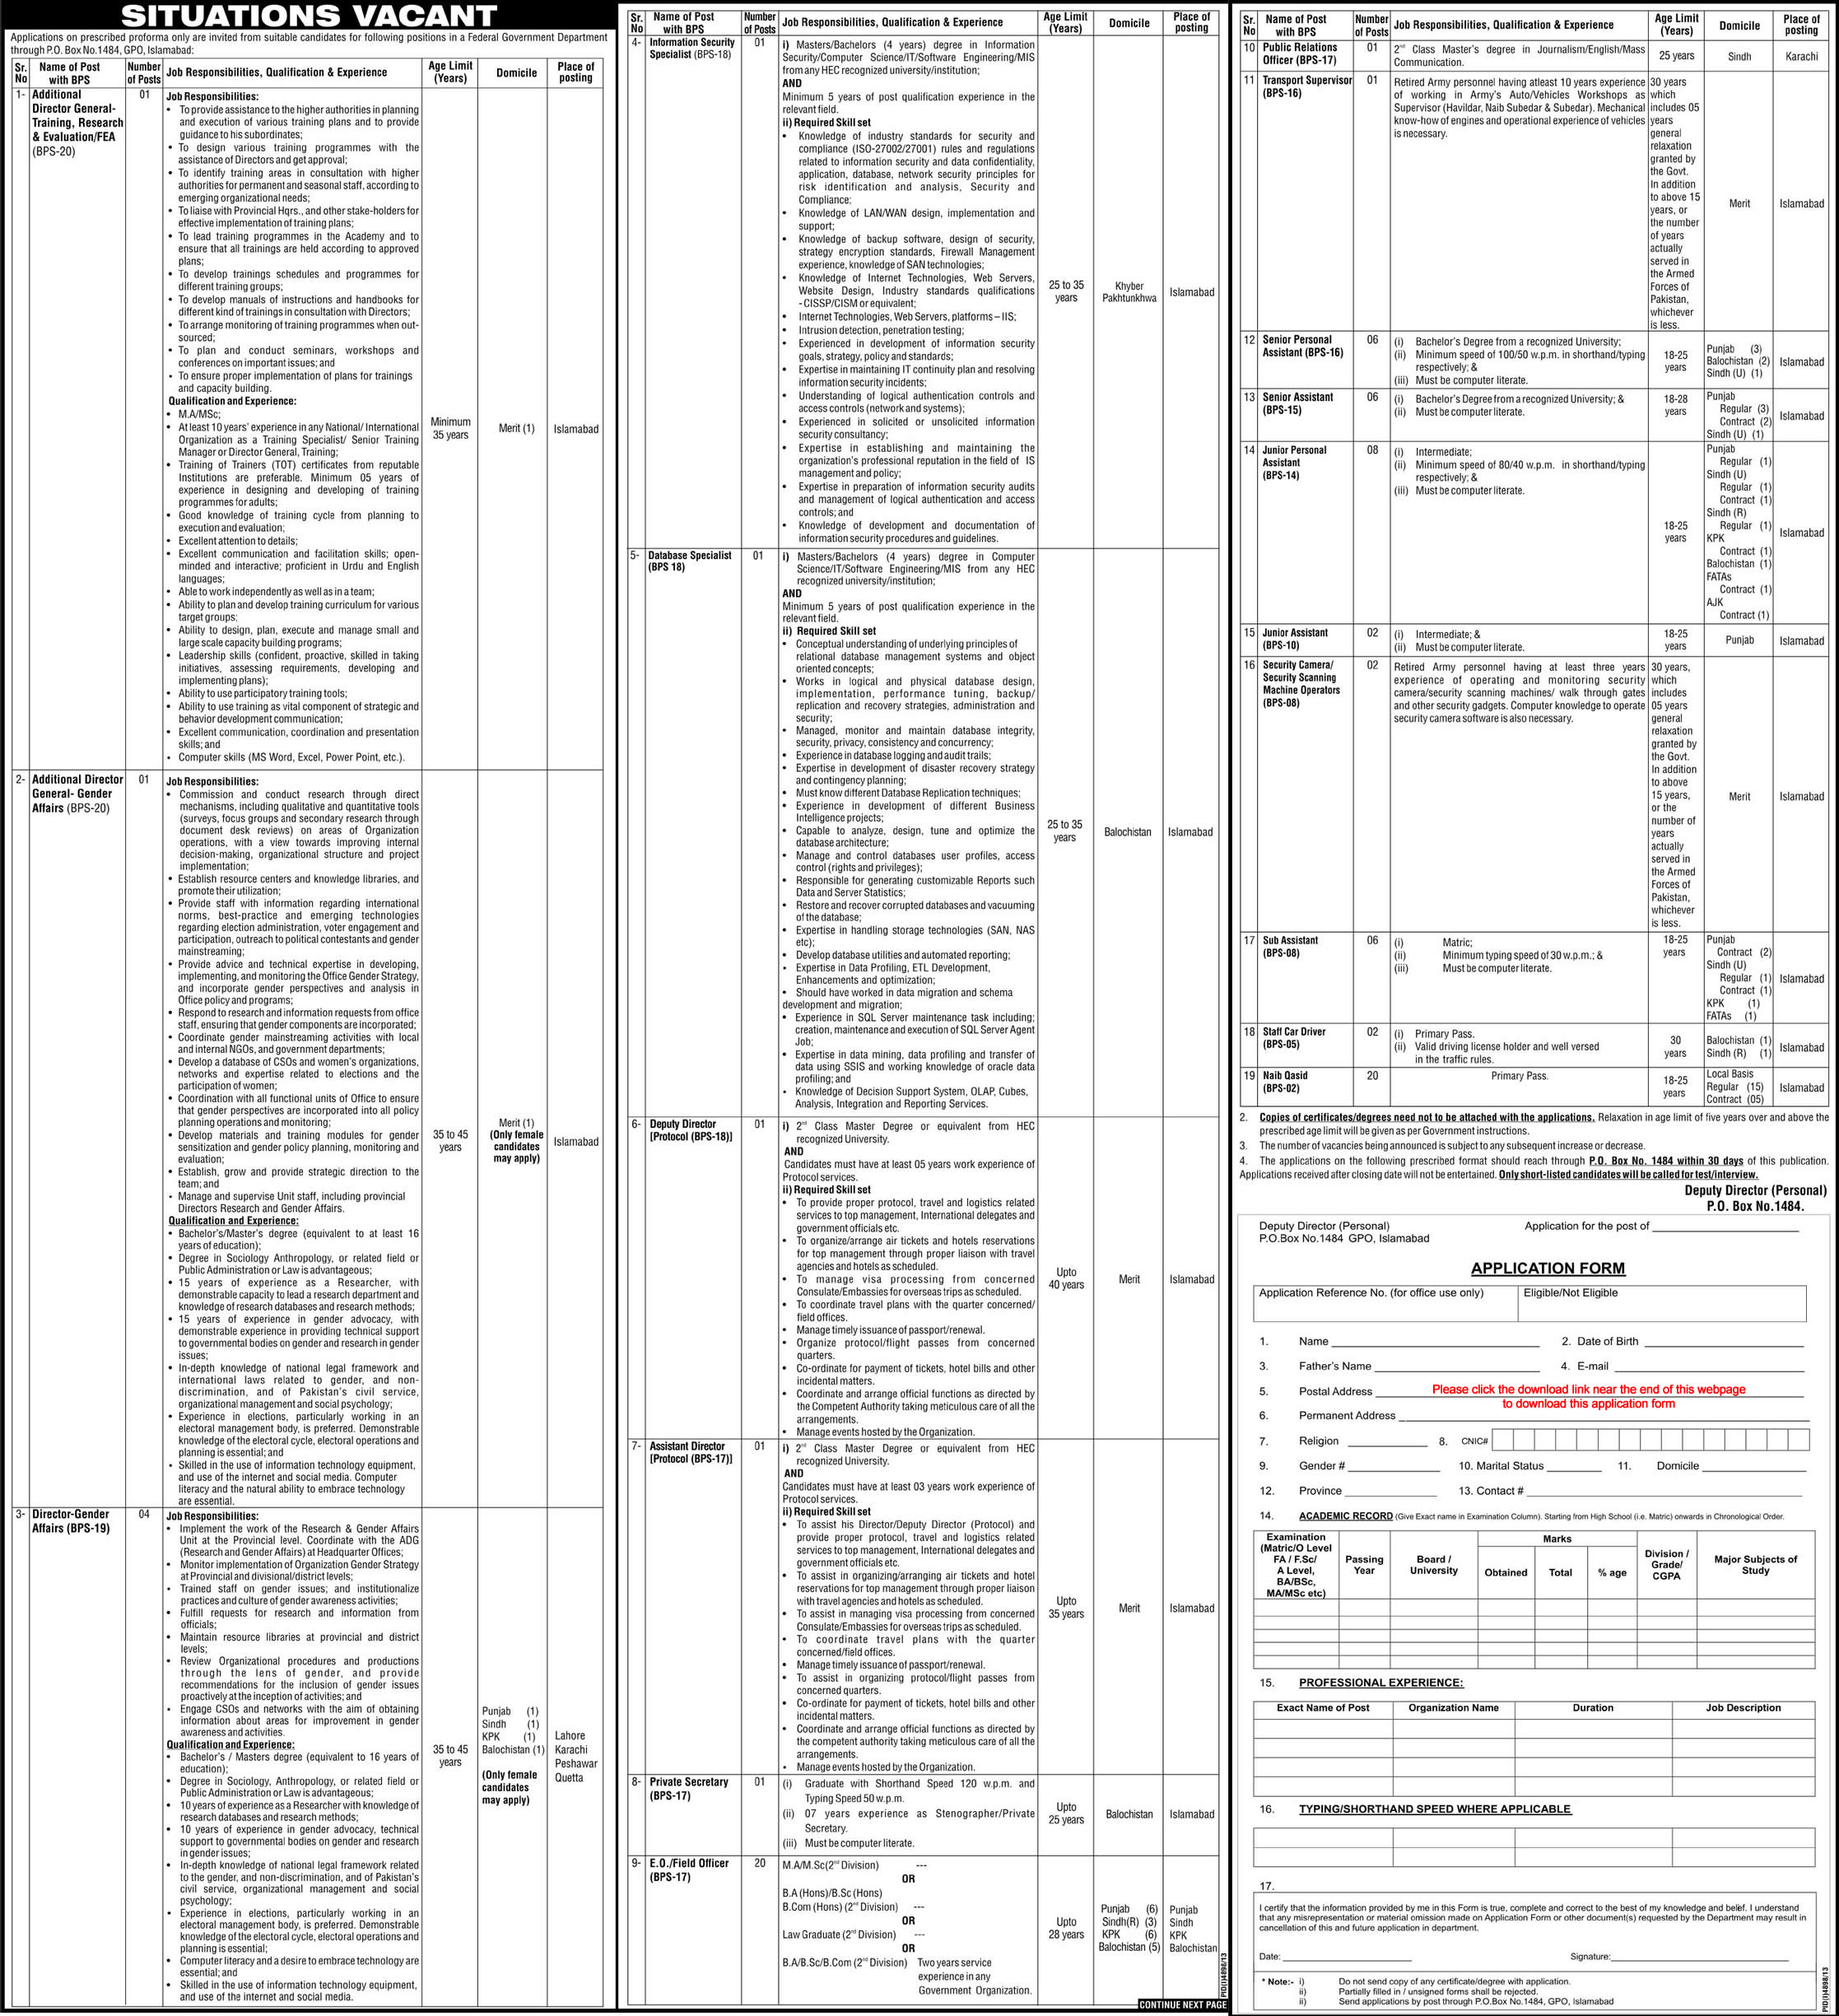 PO Box 1484 GPO Islamabad Jobs 2014 May Application Form Download